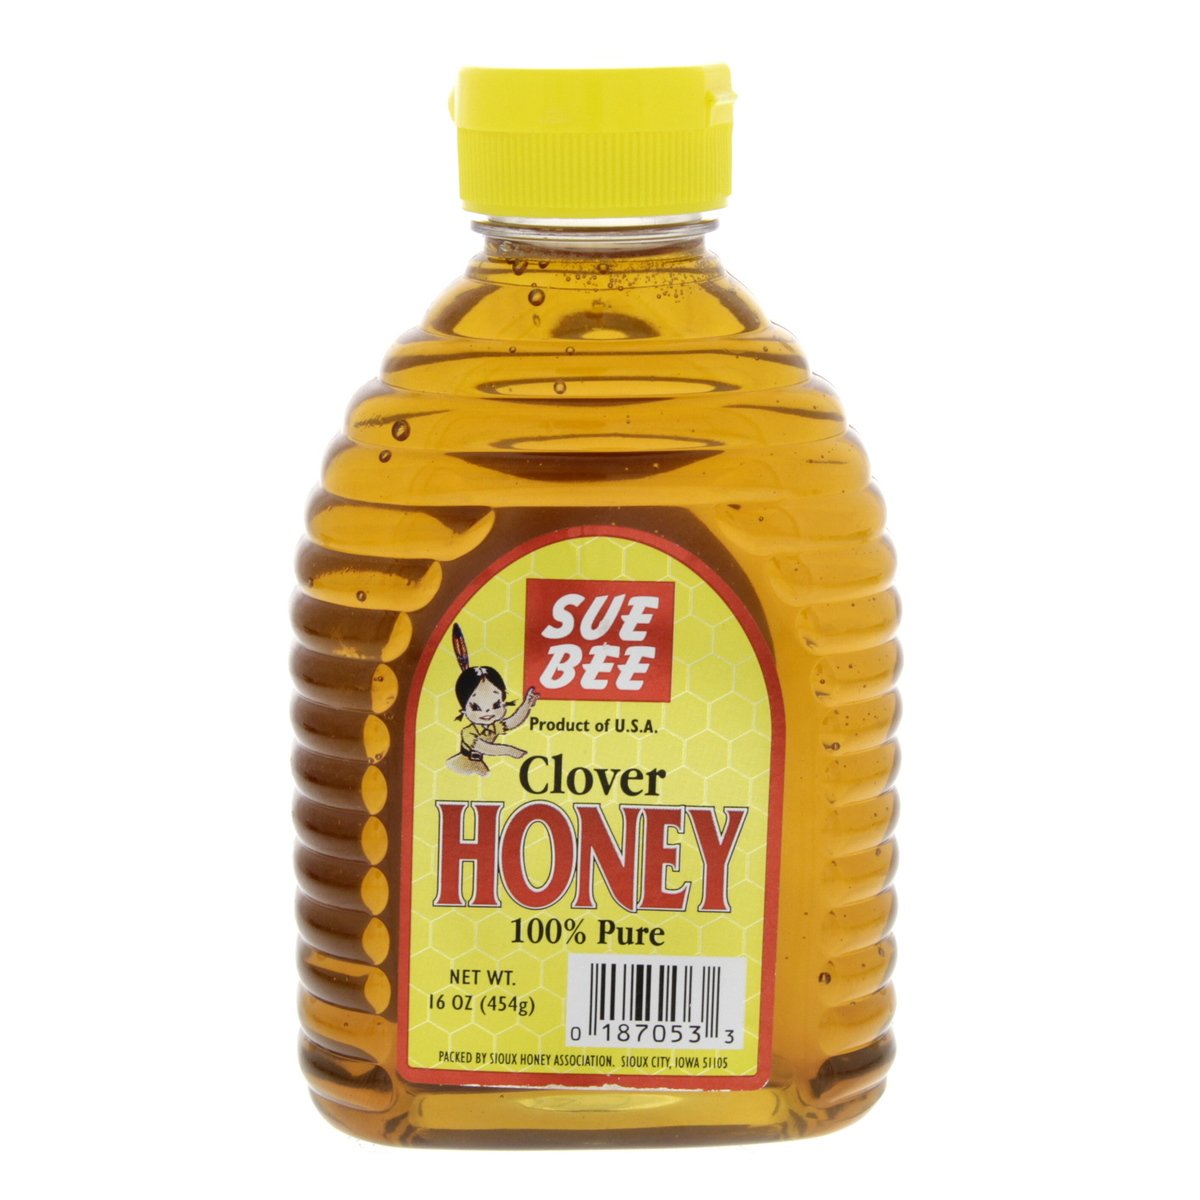 Sue Bee Clover Honey 454 g